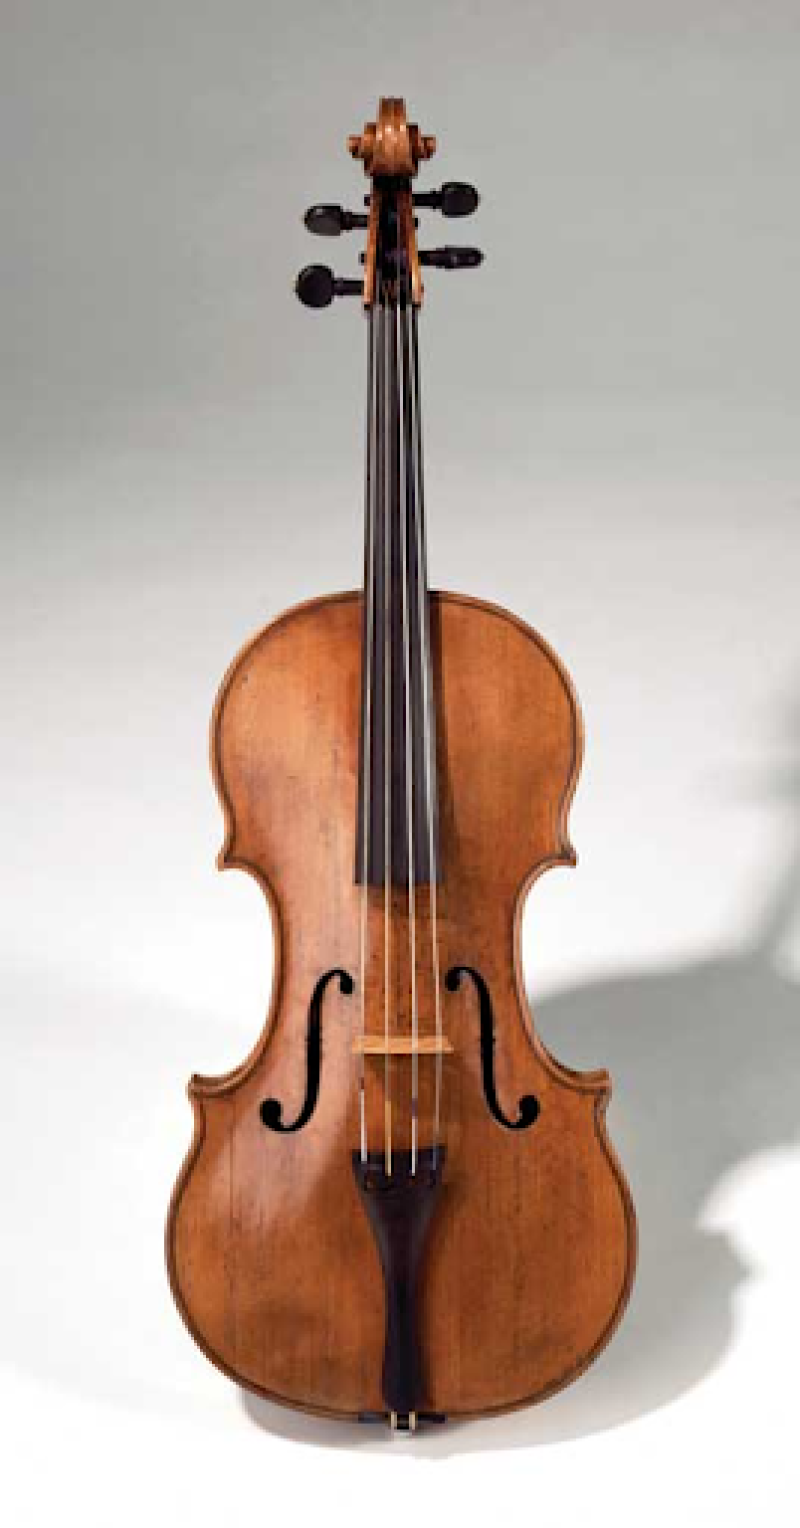 A brown wooden viola